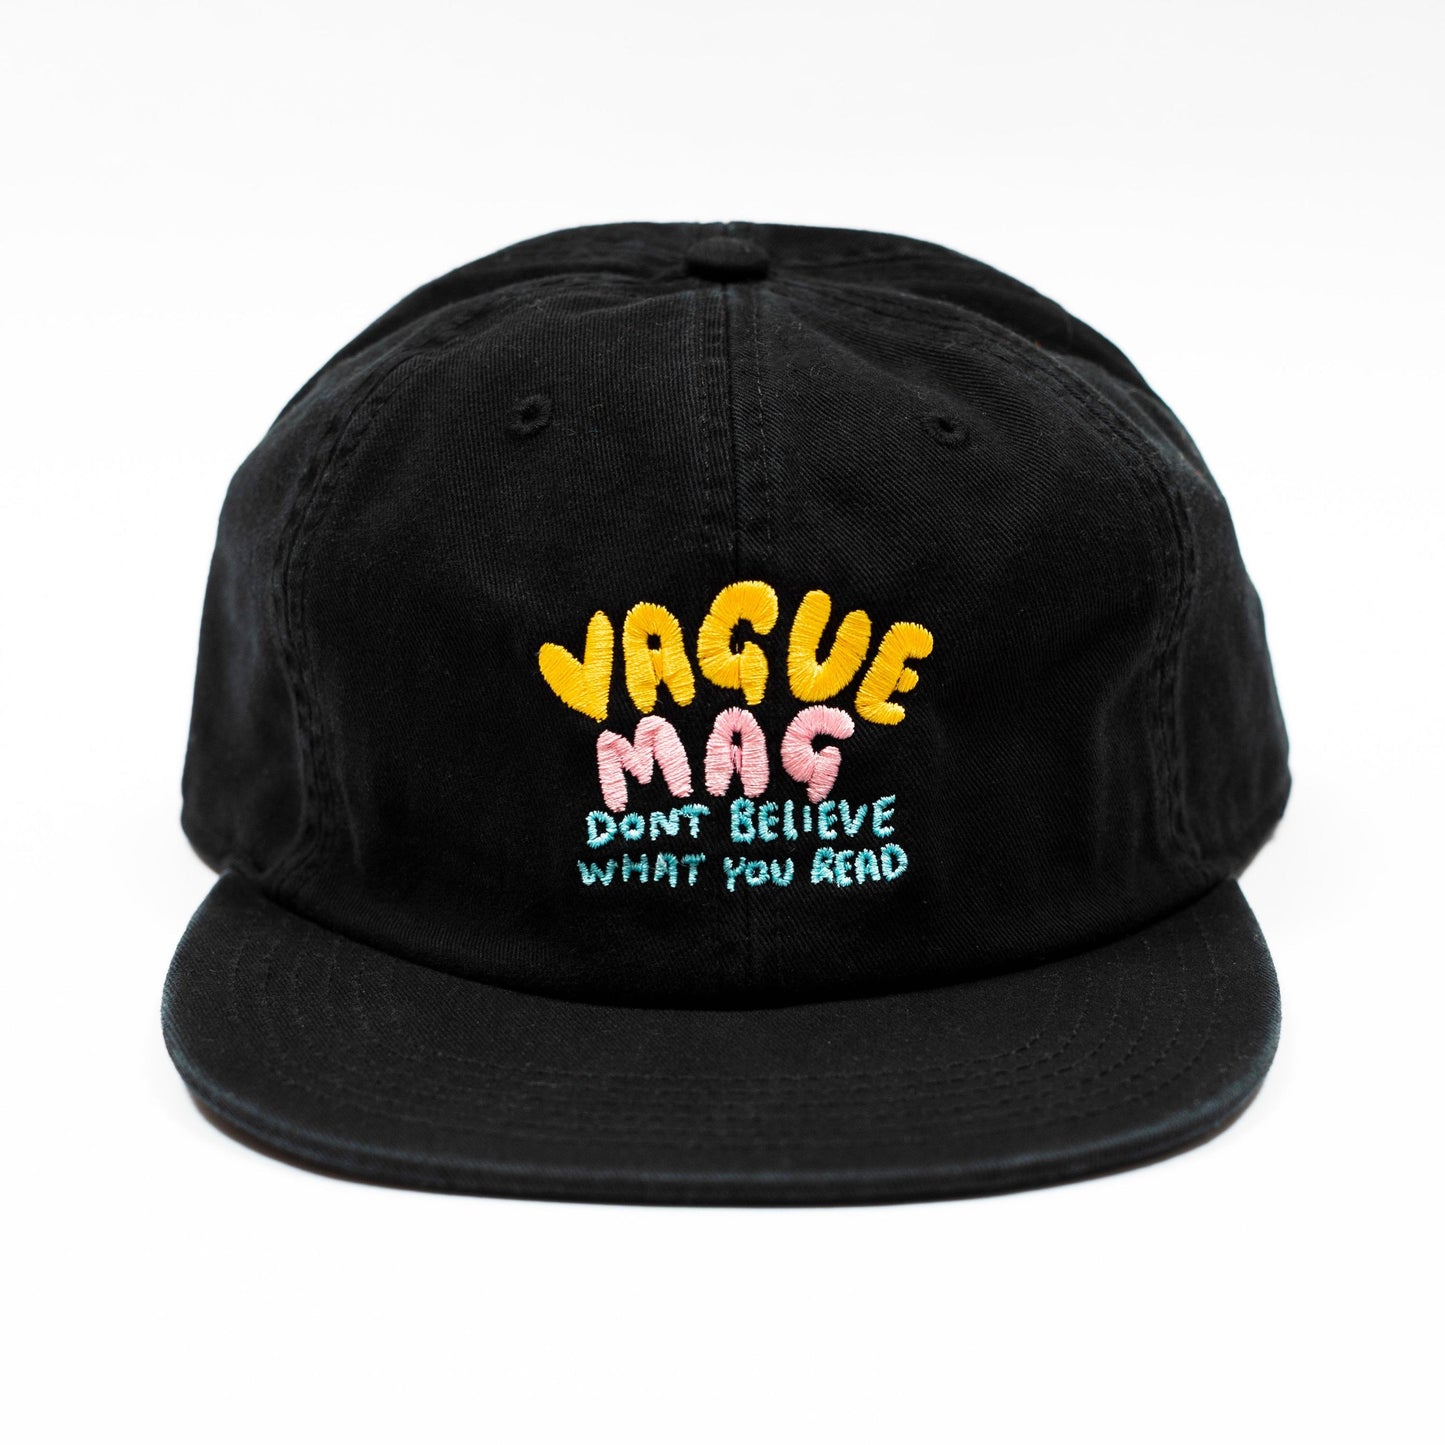 Vague x Mike O'Shea - Embroidered Six Panel Hat - Black